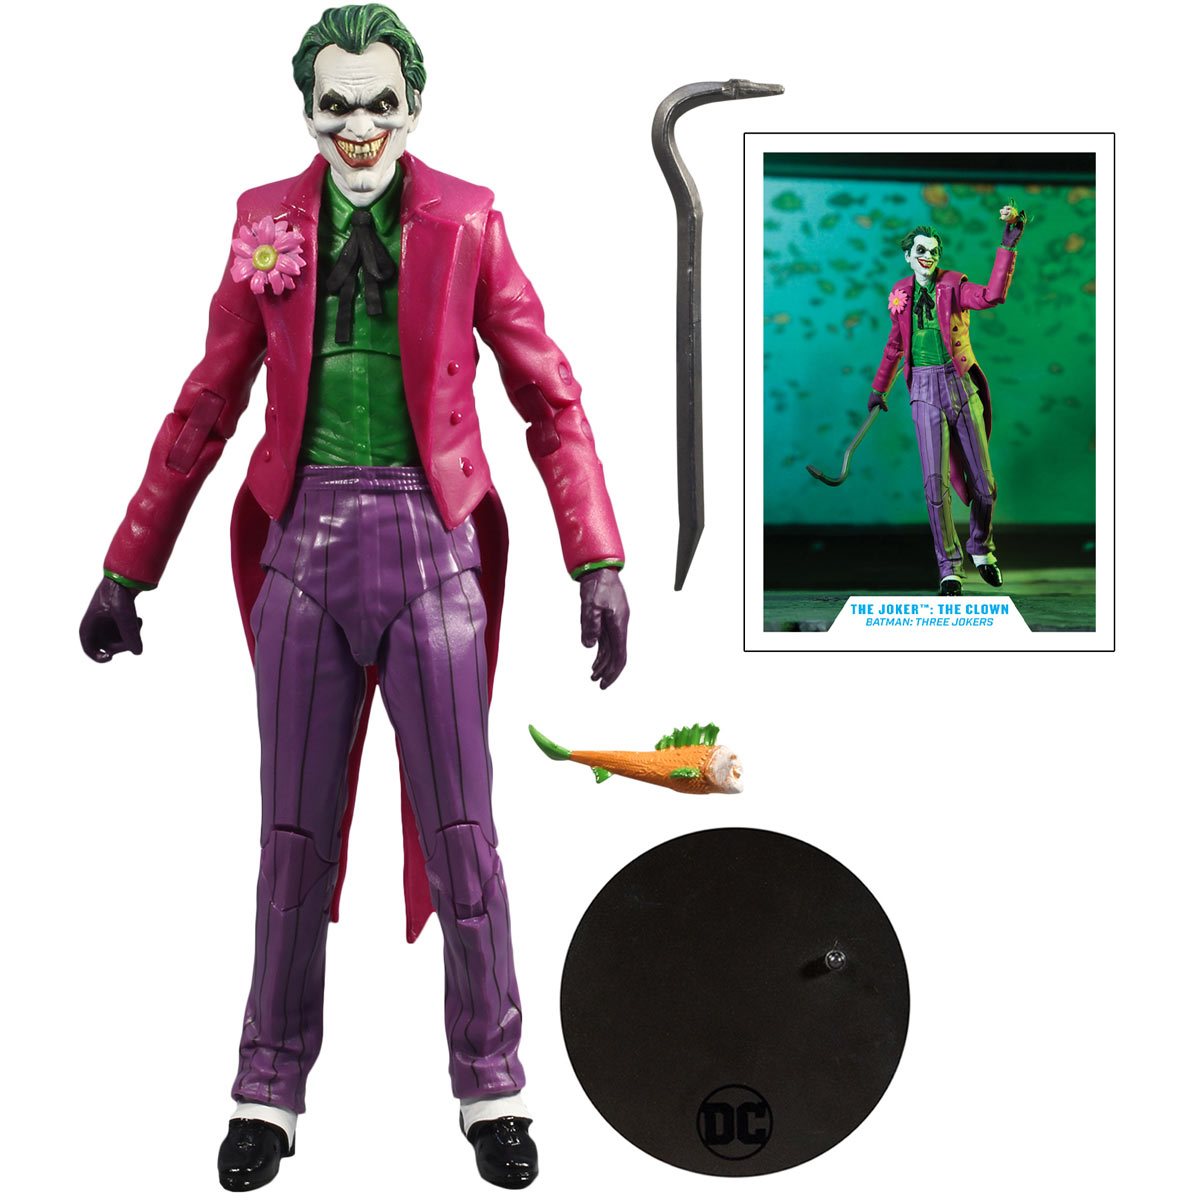 Batman Three Jokers: Joker Clown 7 Inch Action Figure